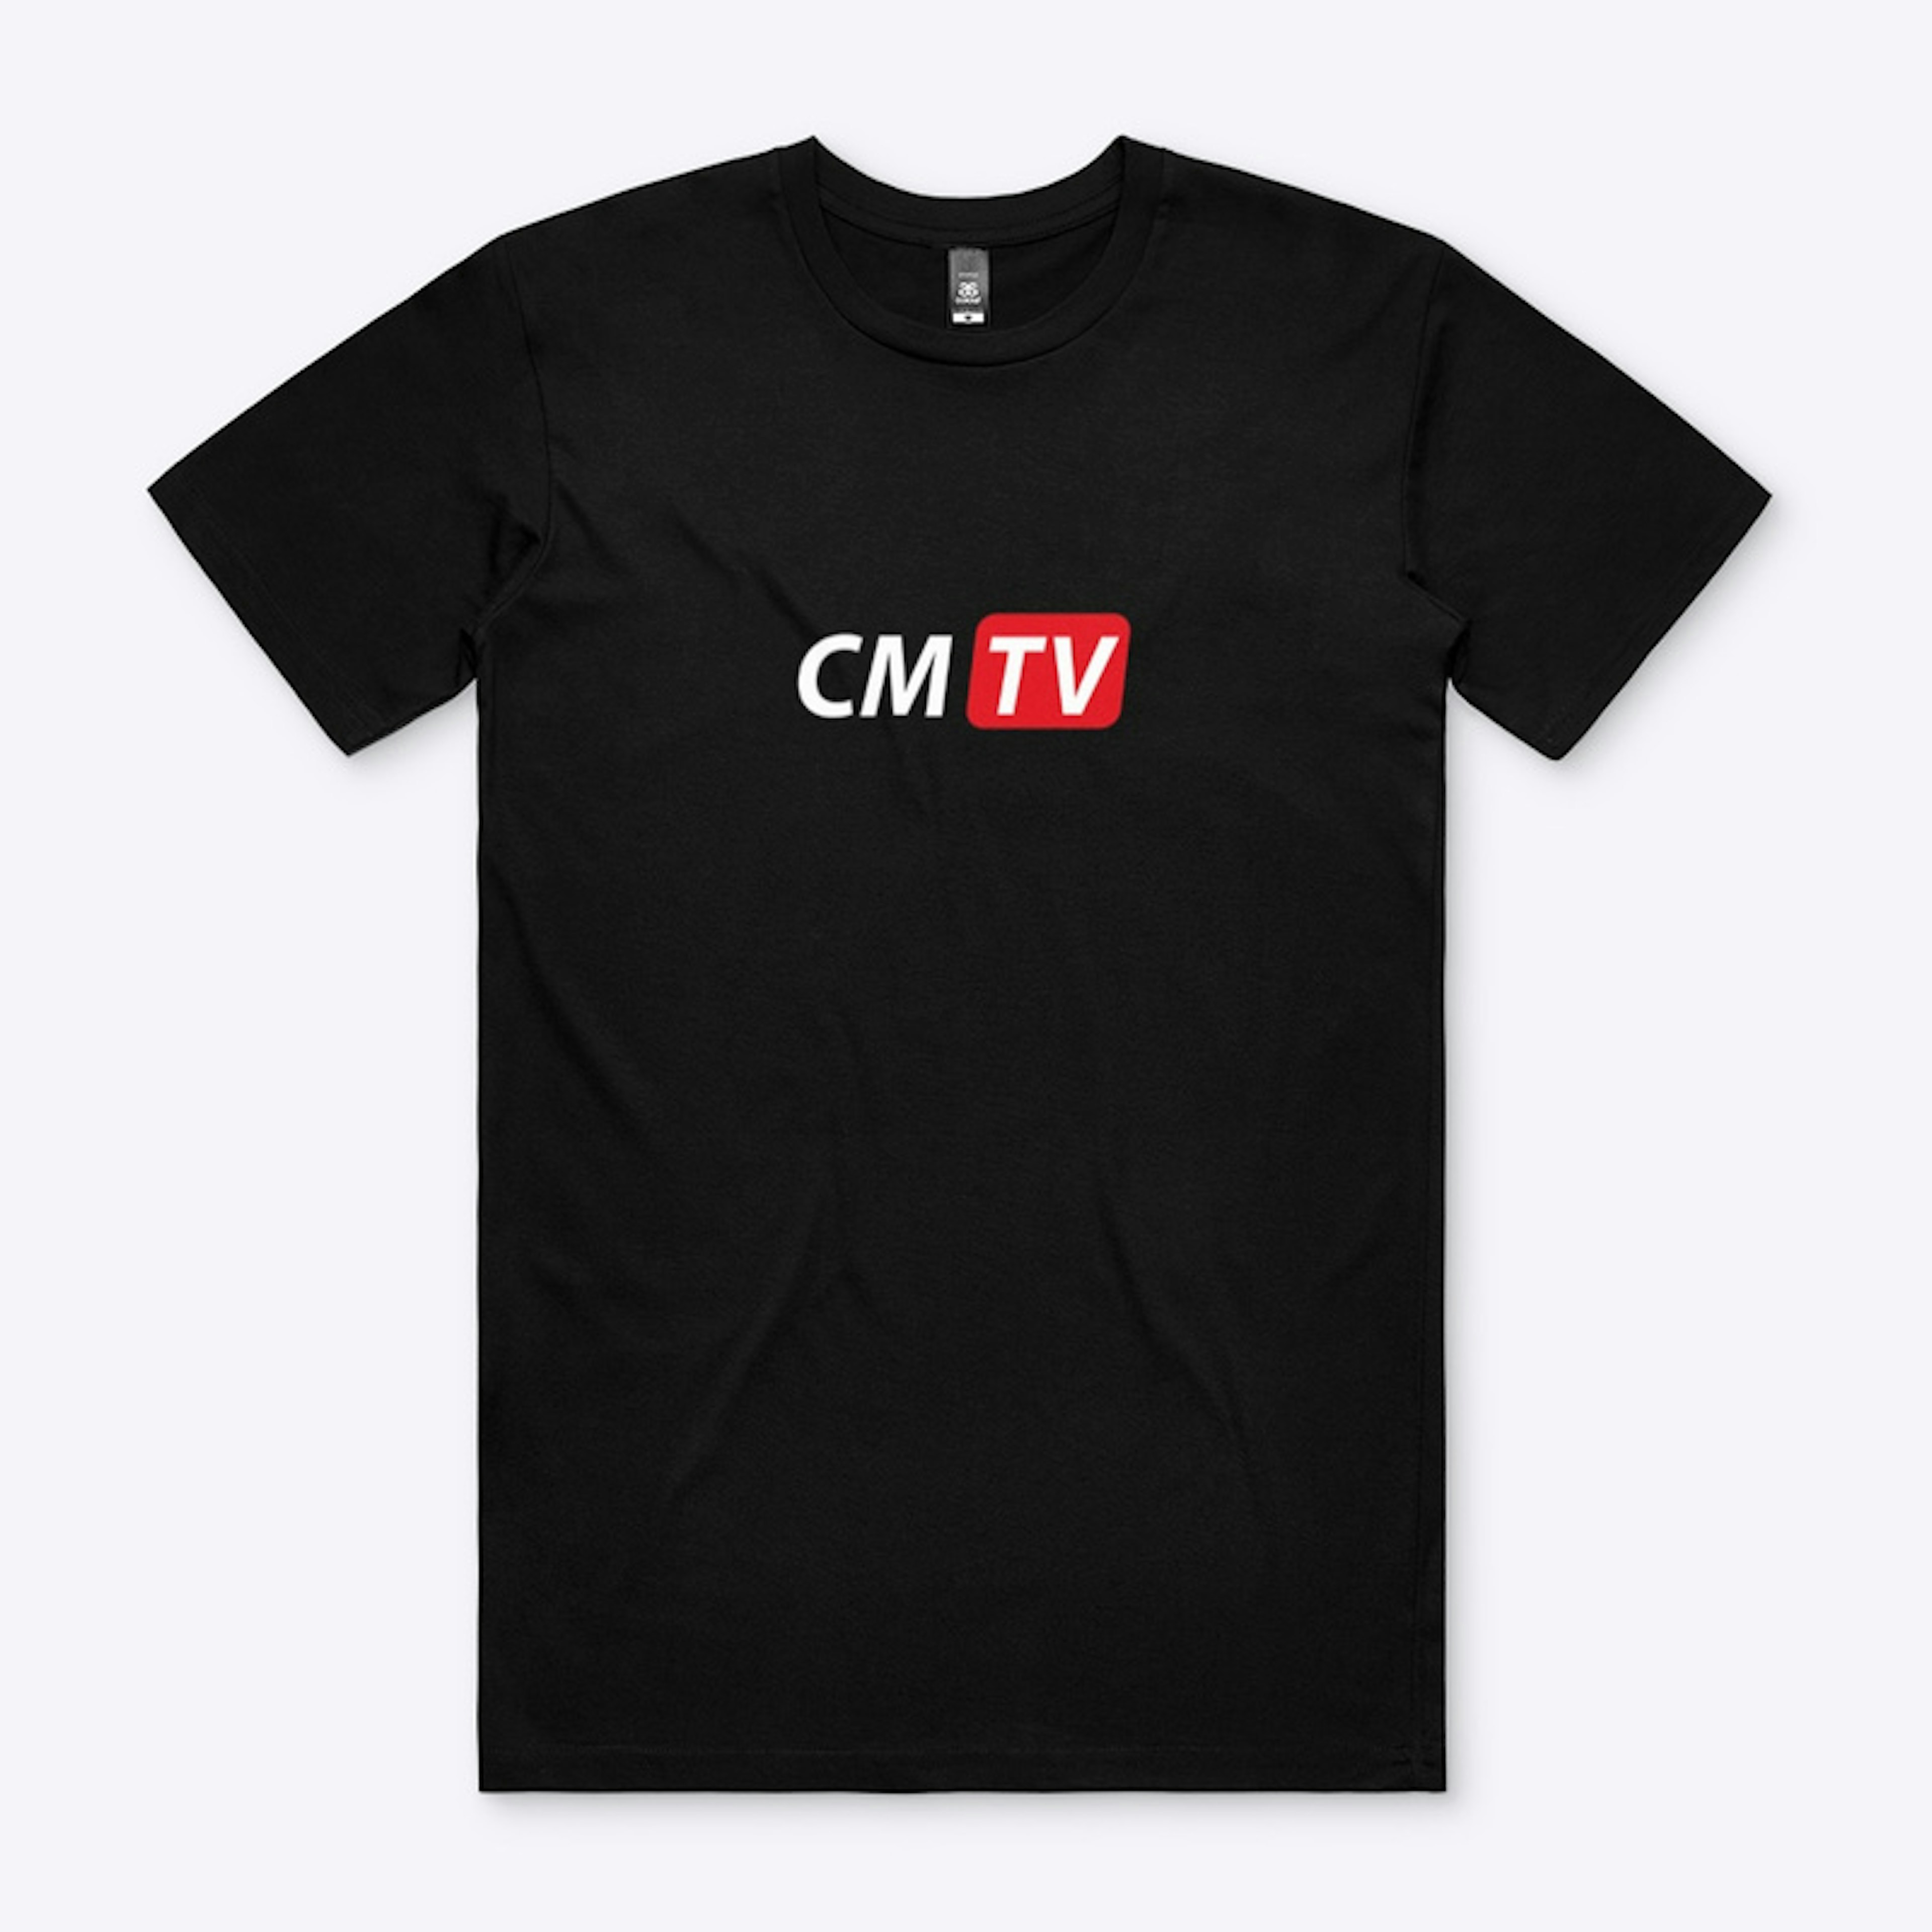 CMTV branded tee